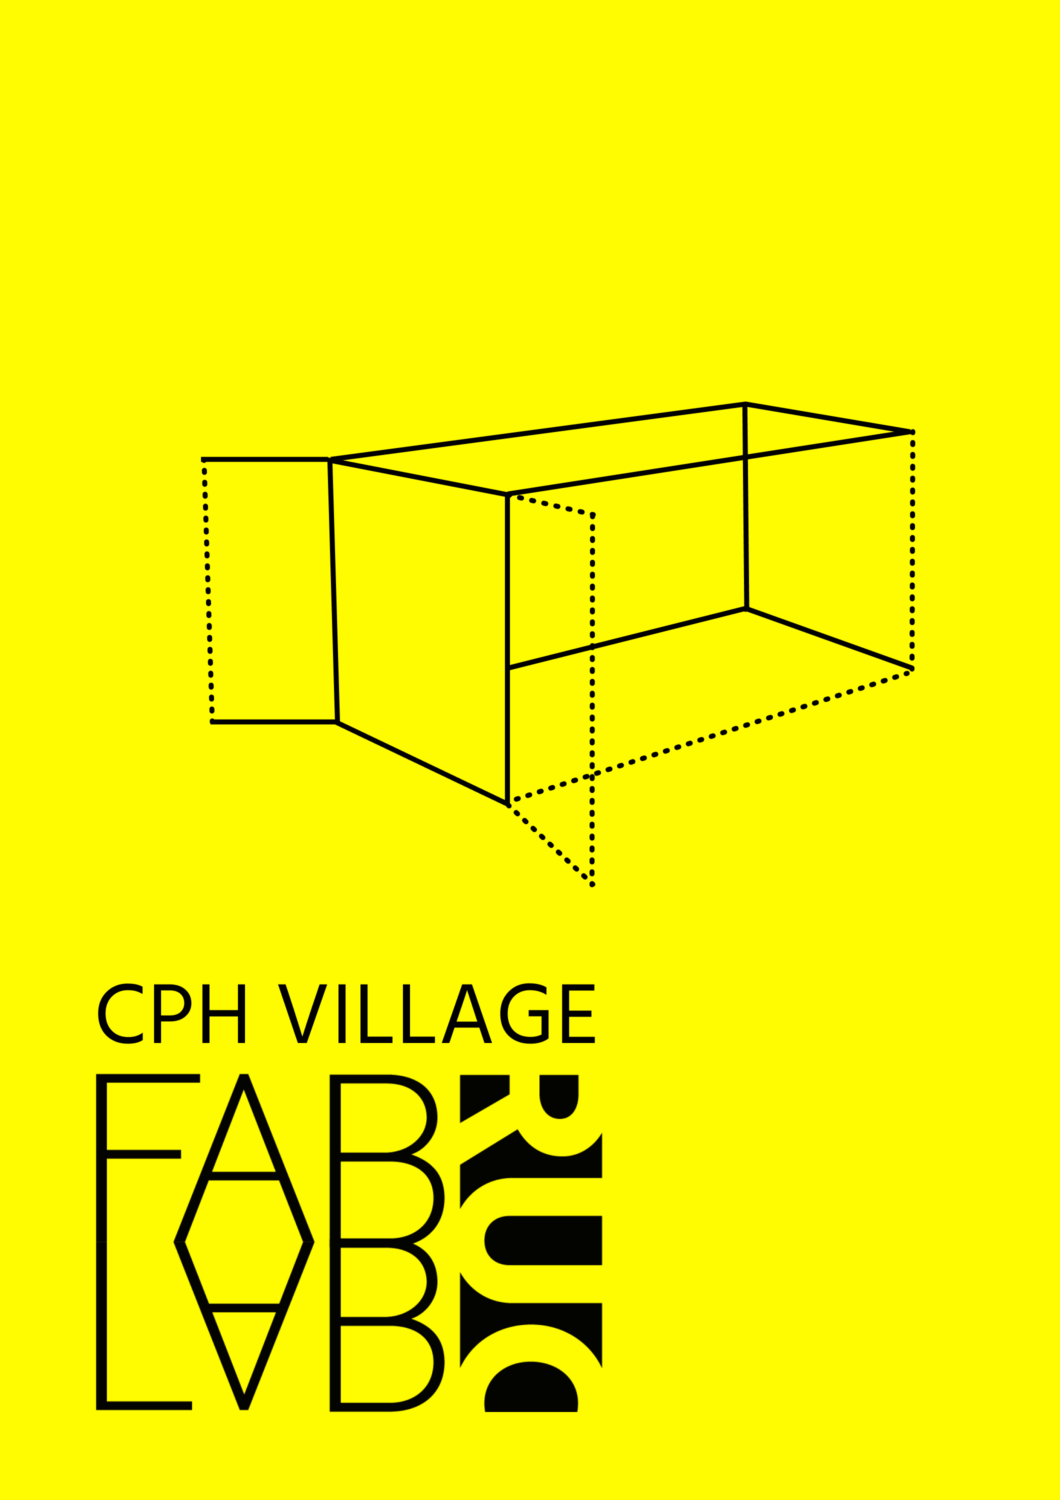 CPH Village Makerspace